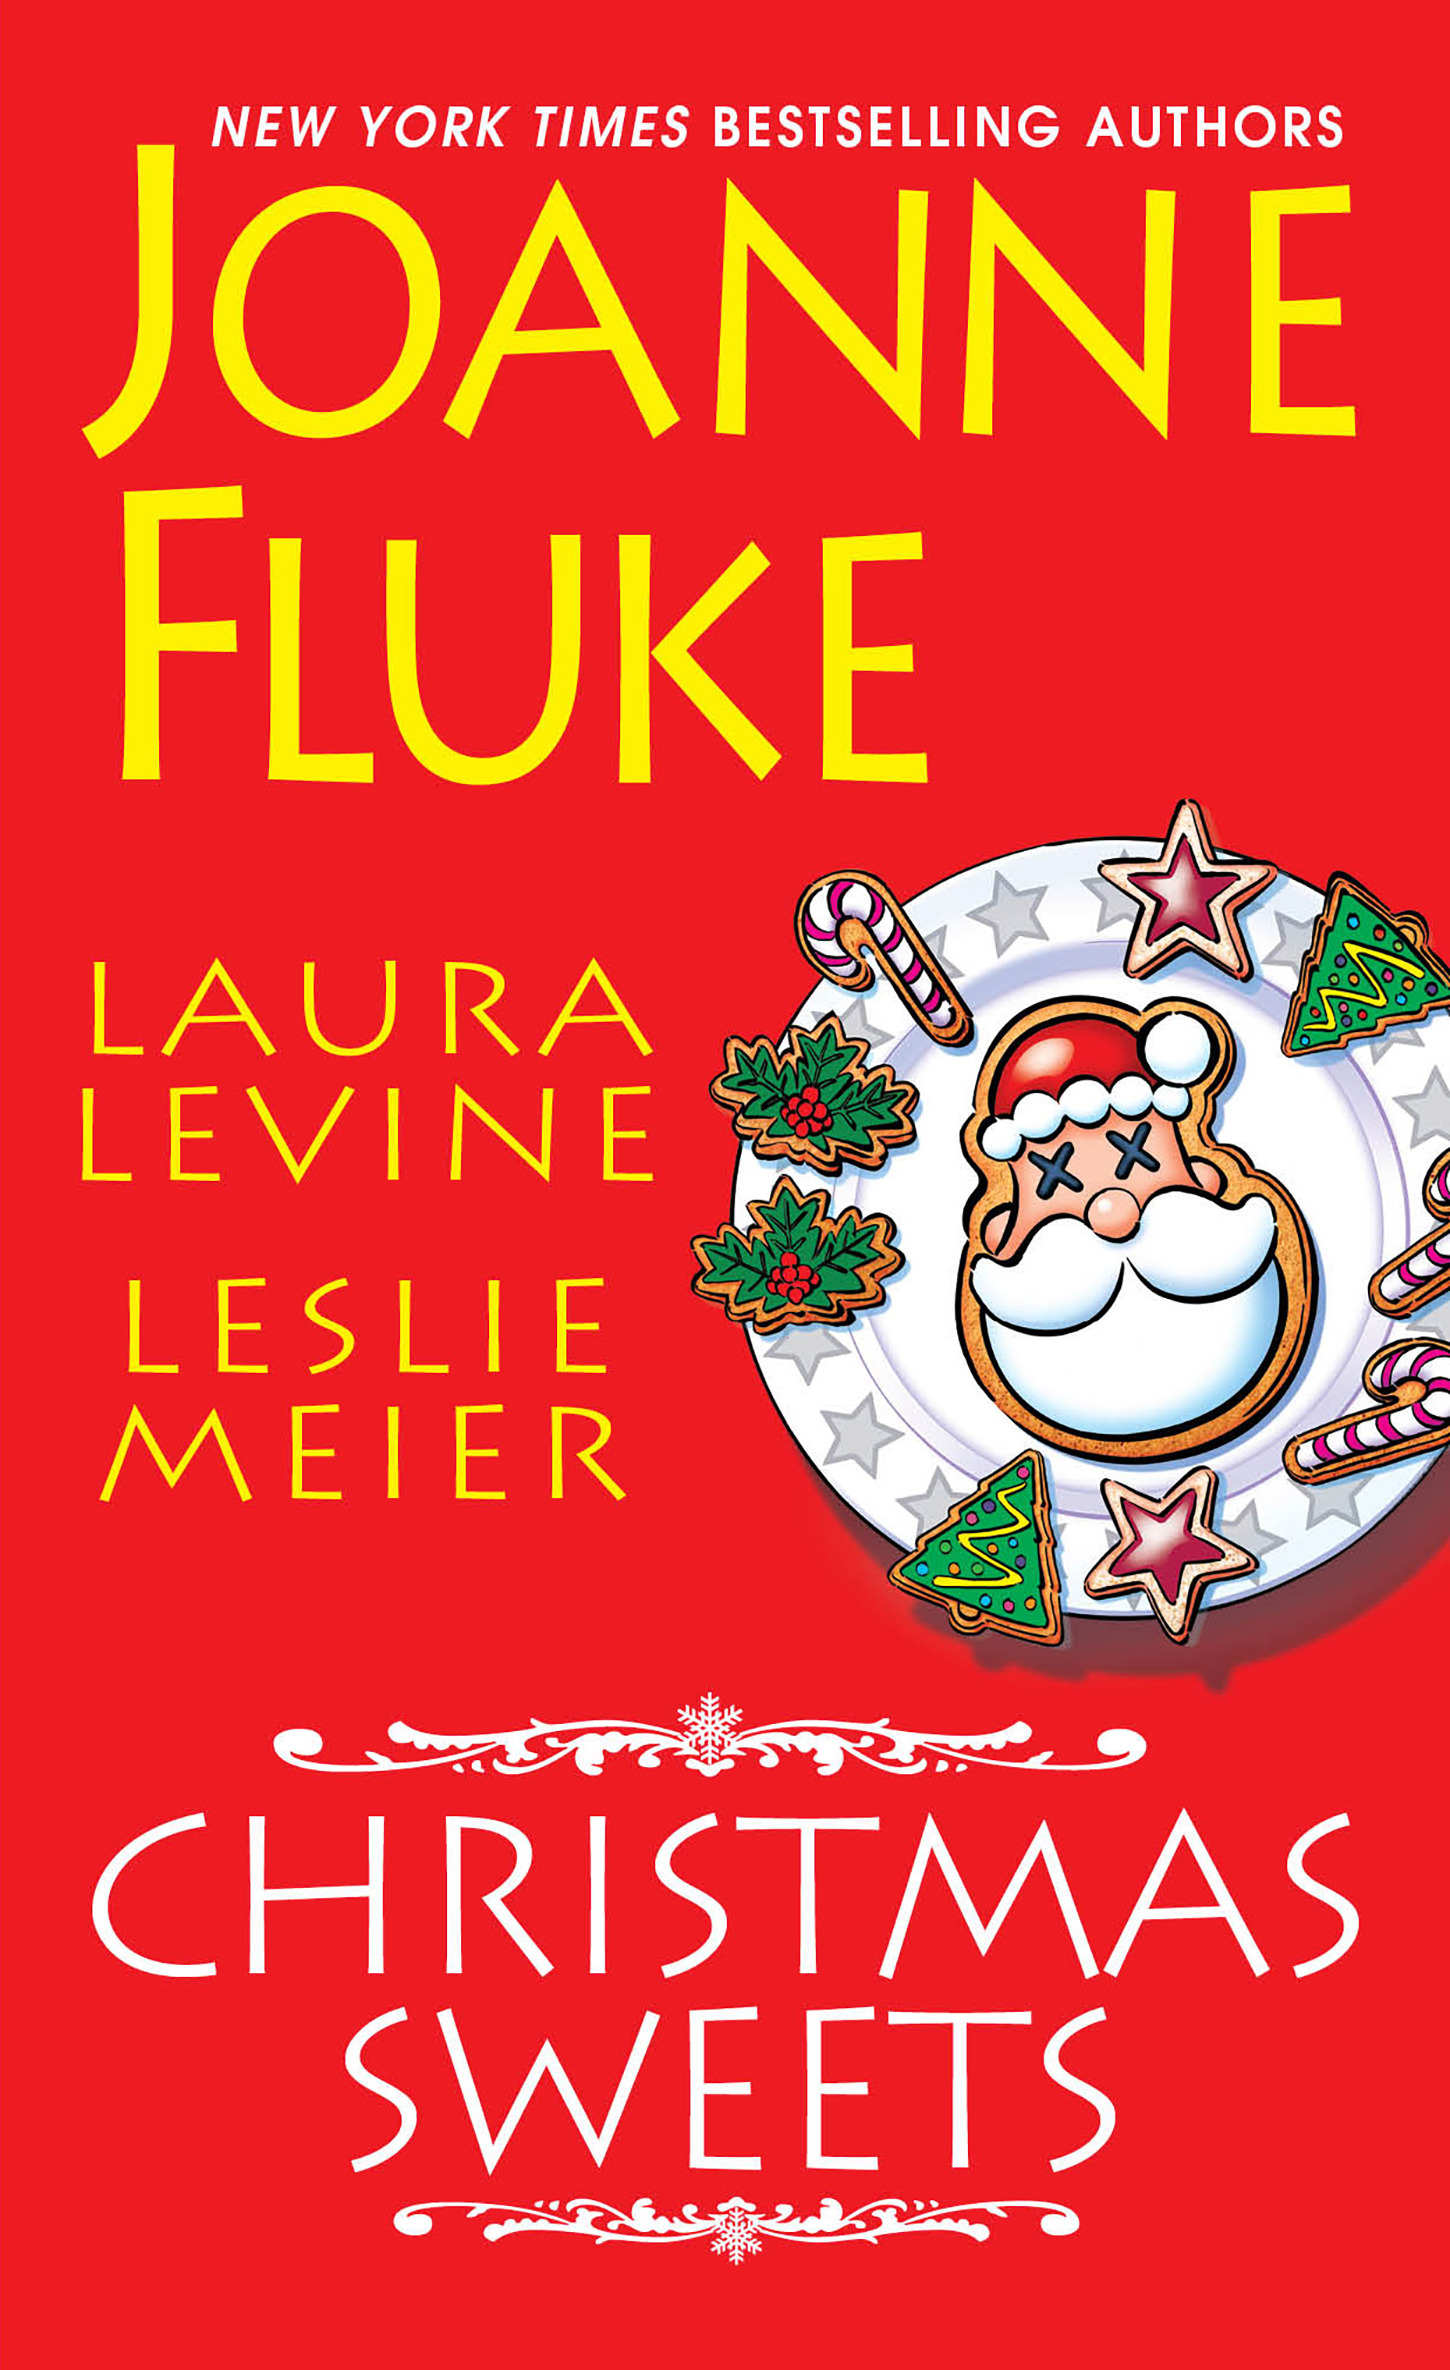 Christmas Sweets | Fluke, Joanne